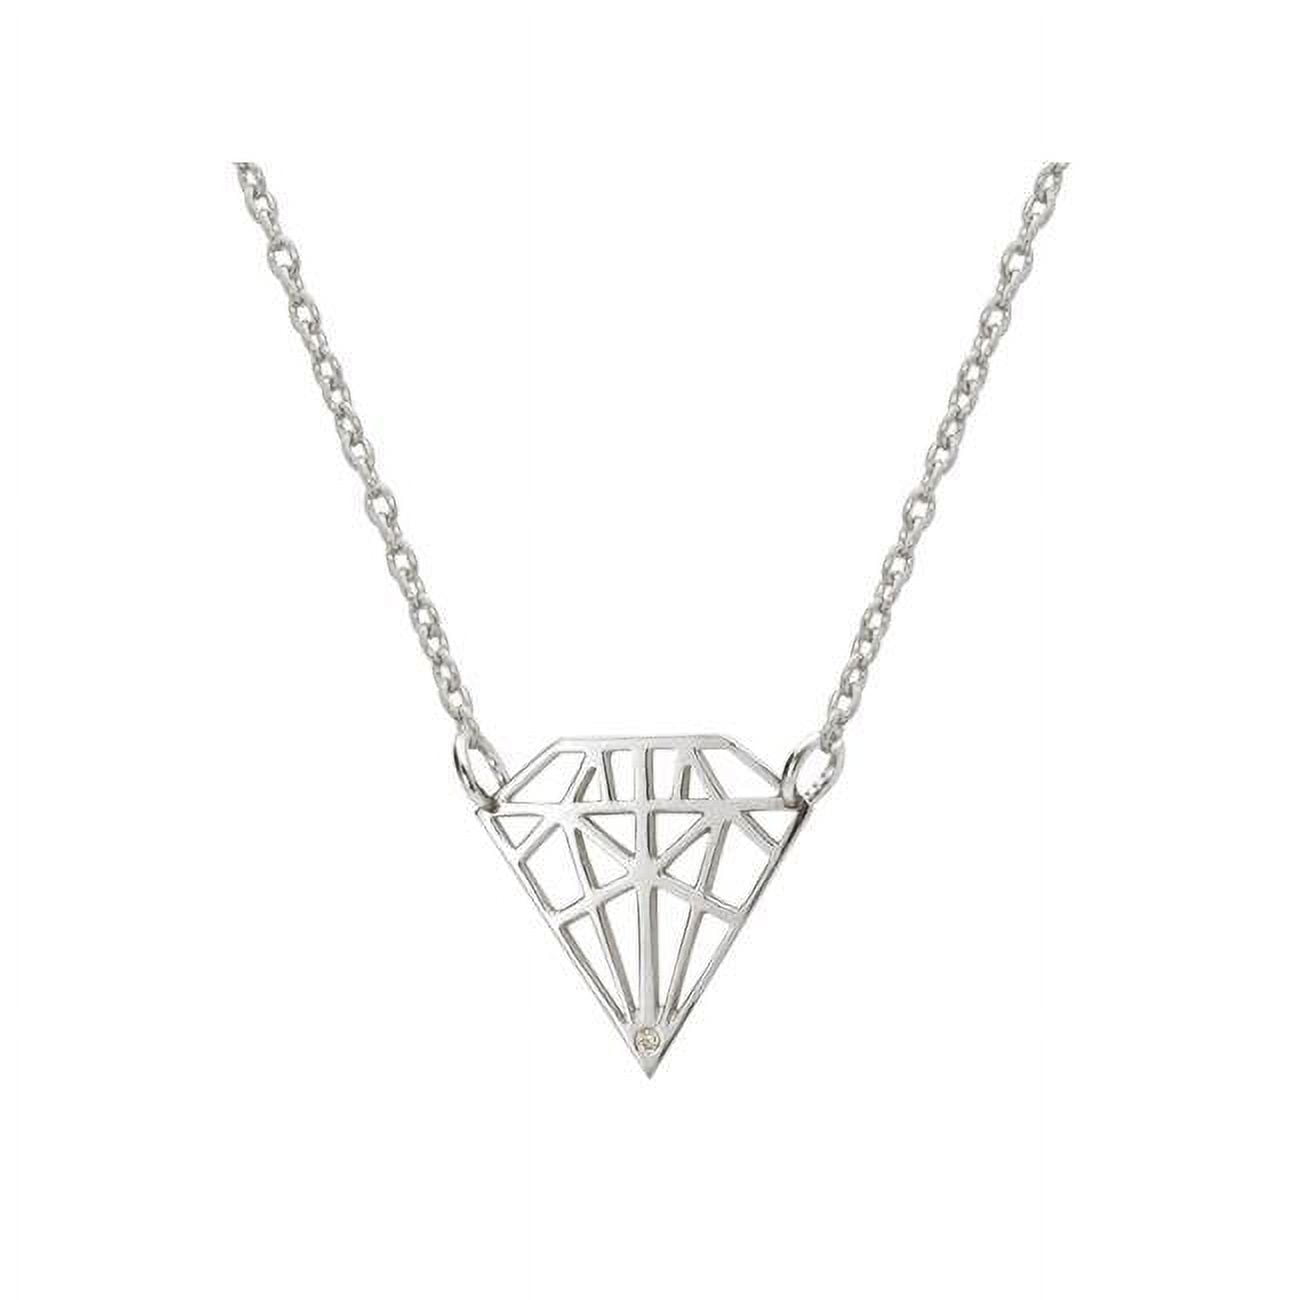 Je1110 925 Sterling Silver Necklace Diamond Shaped Pendant With Sparkling Cz Stone